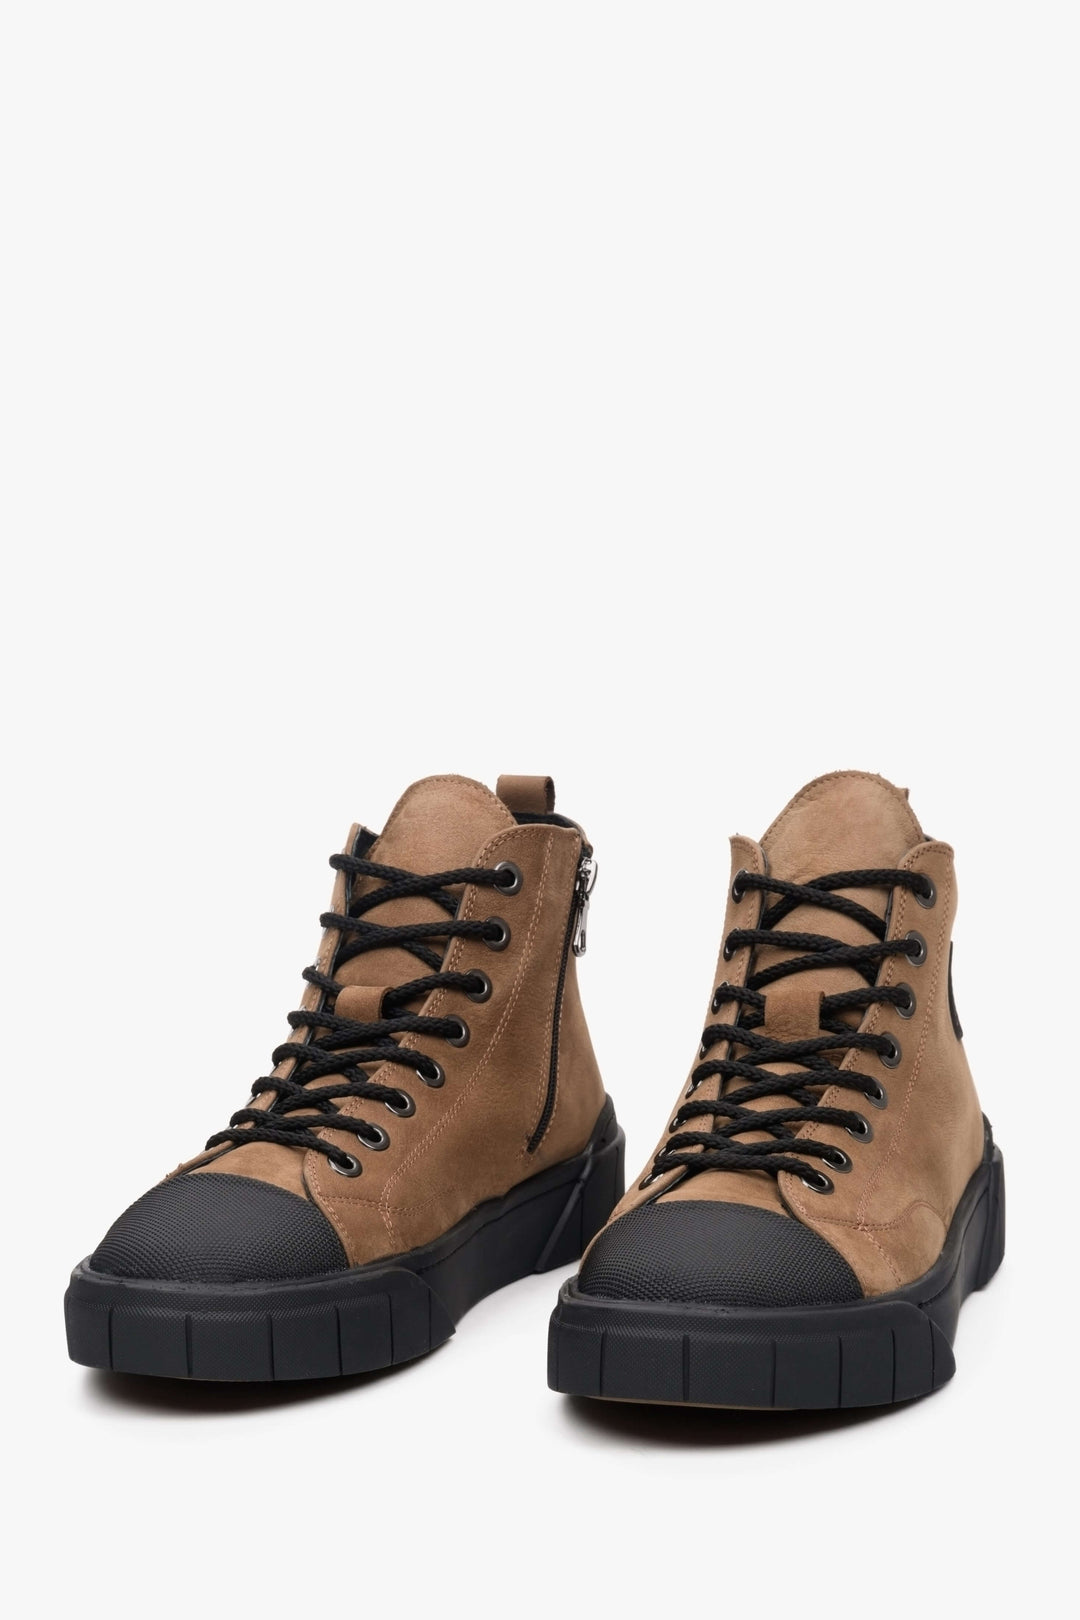 Estro brand men's lace-up winter sneakers in brown - presentation of shoe toe.